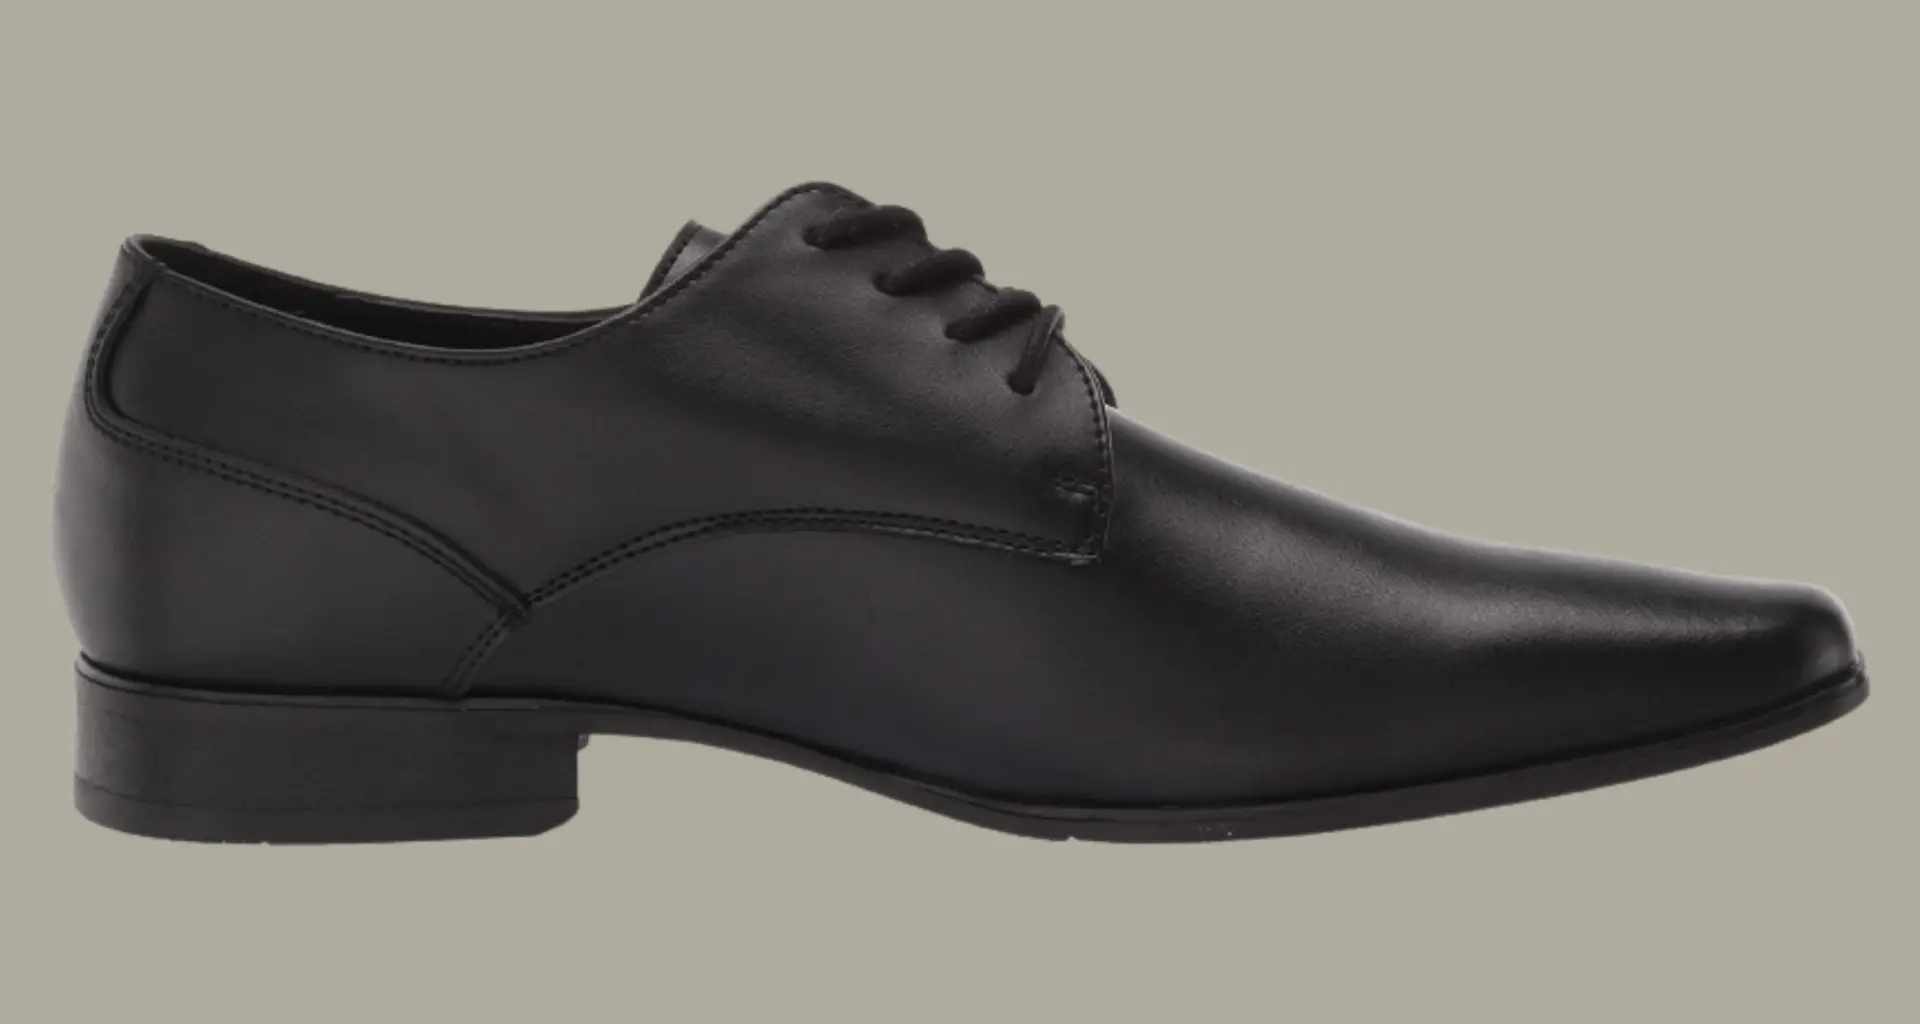 Men's Formal shoe under 100 dollars